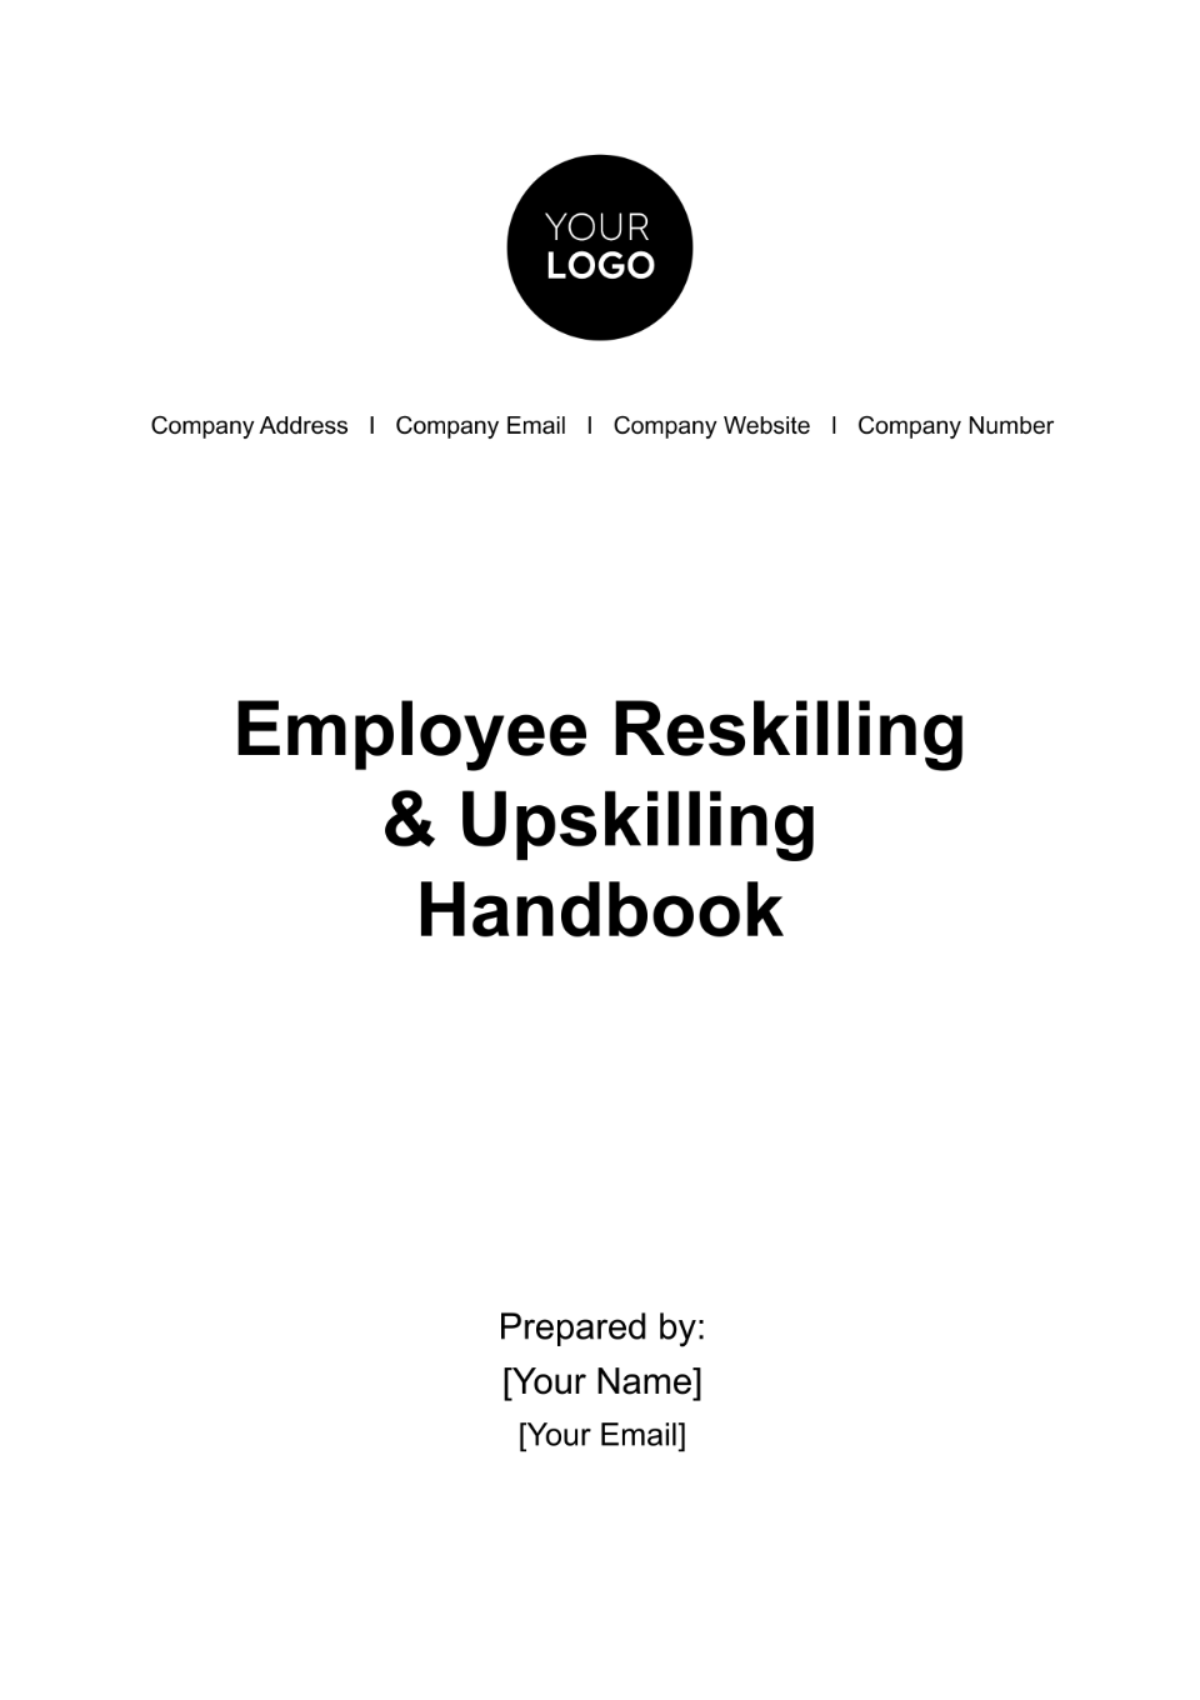 Free Employee Reskilling & Upskilling Handbook HR Template